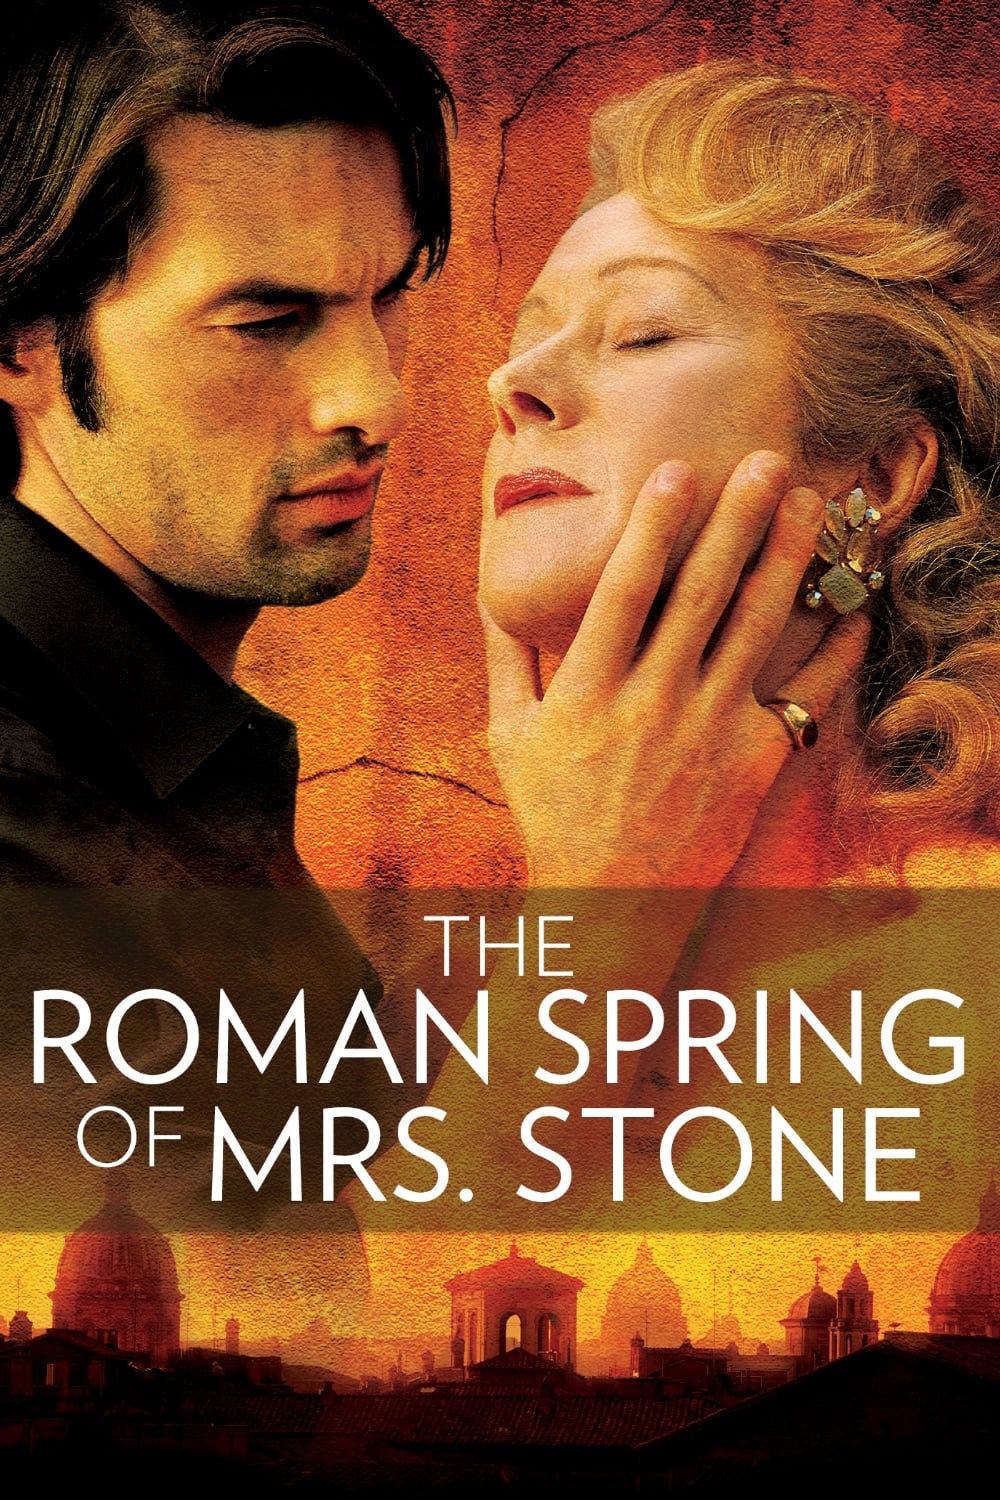 The Roman Spring of Mrs. Stone (2003)